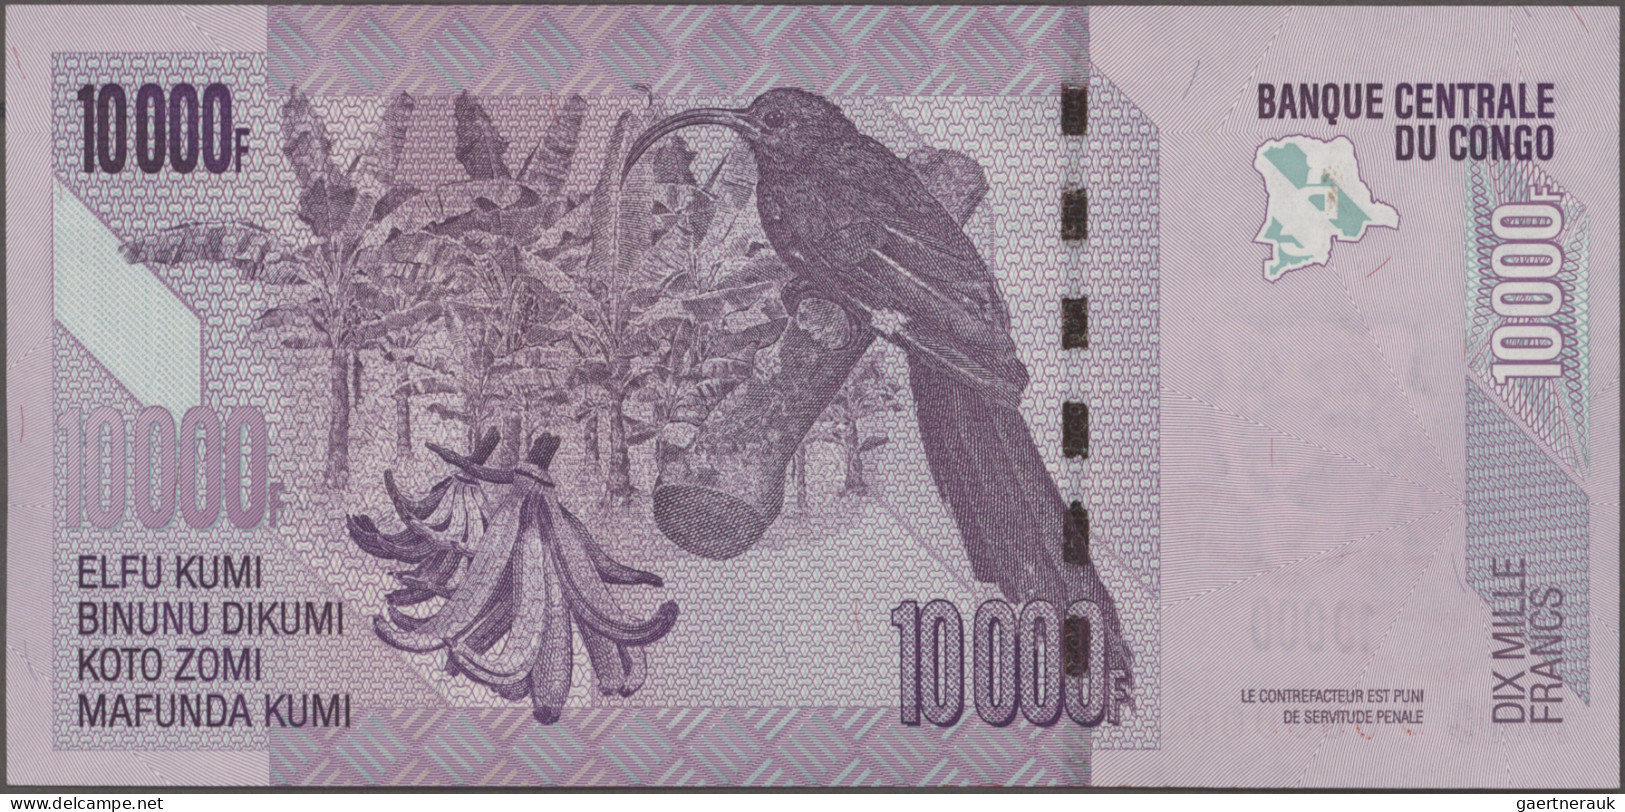 Congo: Banque Central du Congo, huge lot with 32 banknotes, series 1997-2012, co